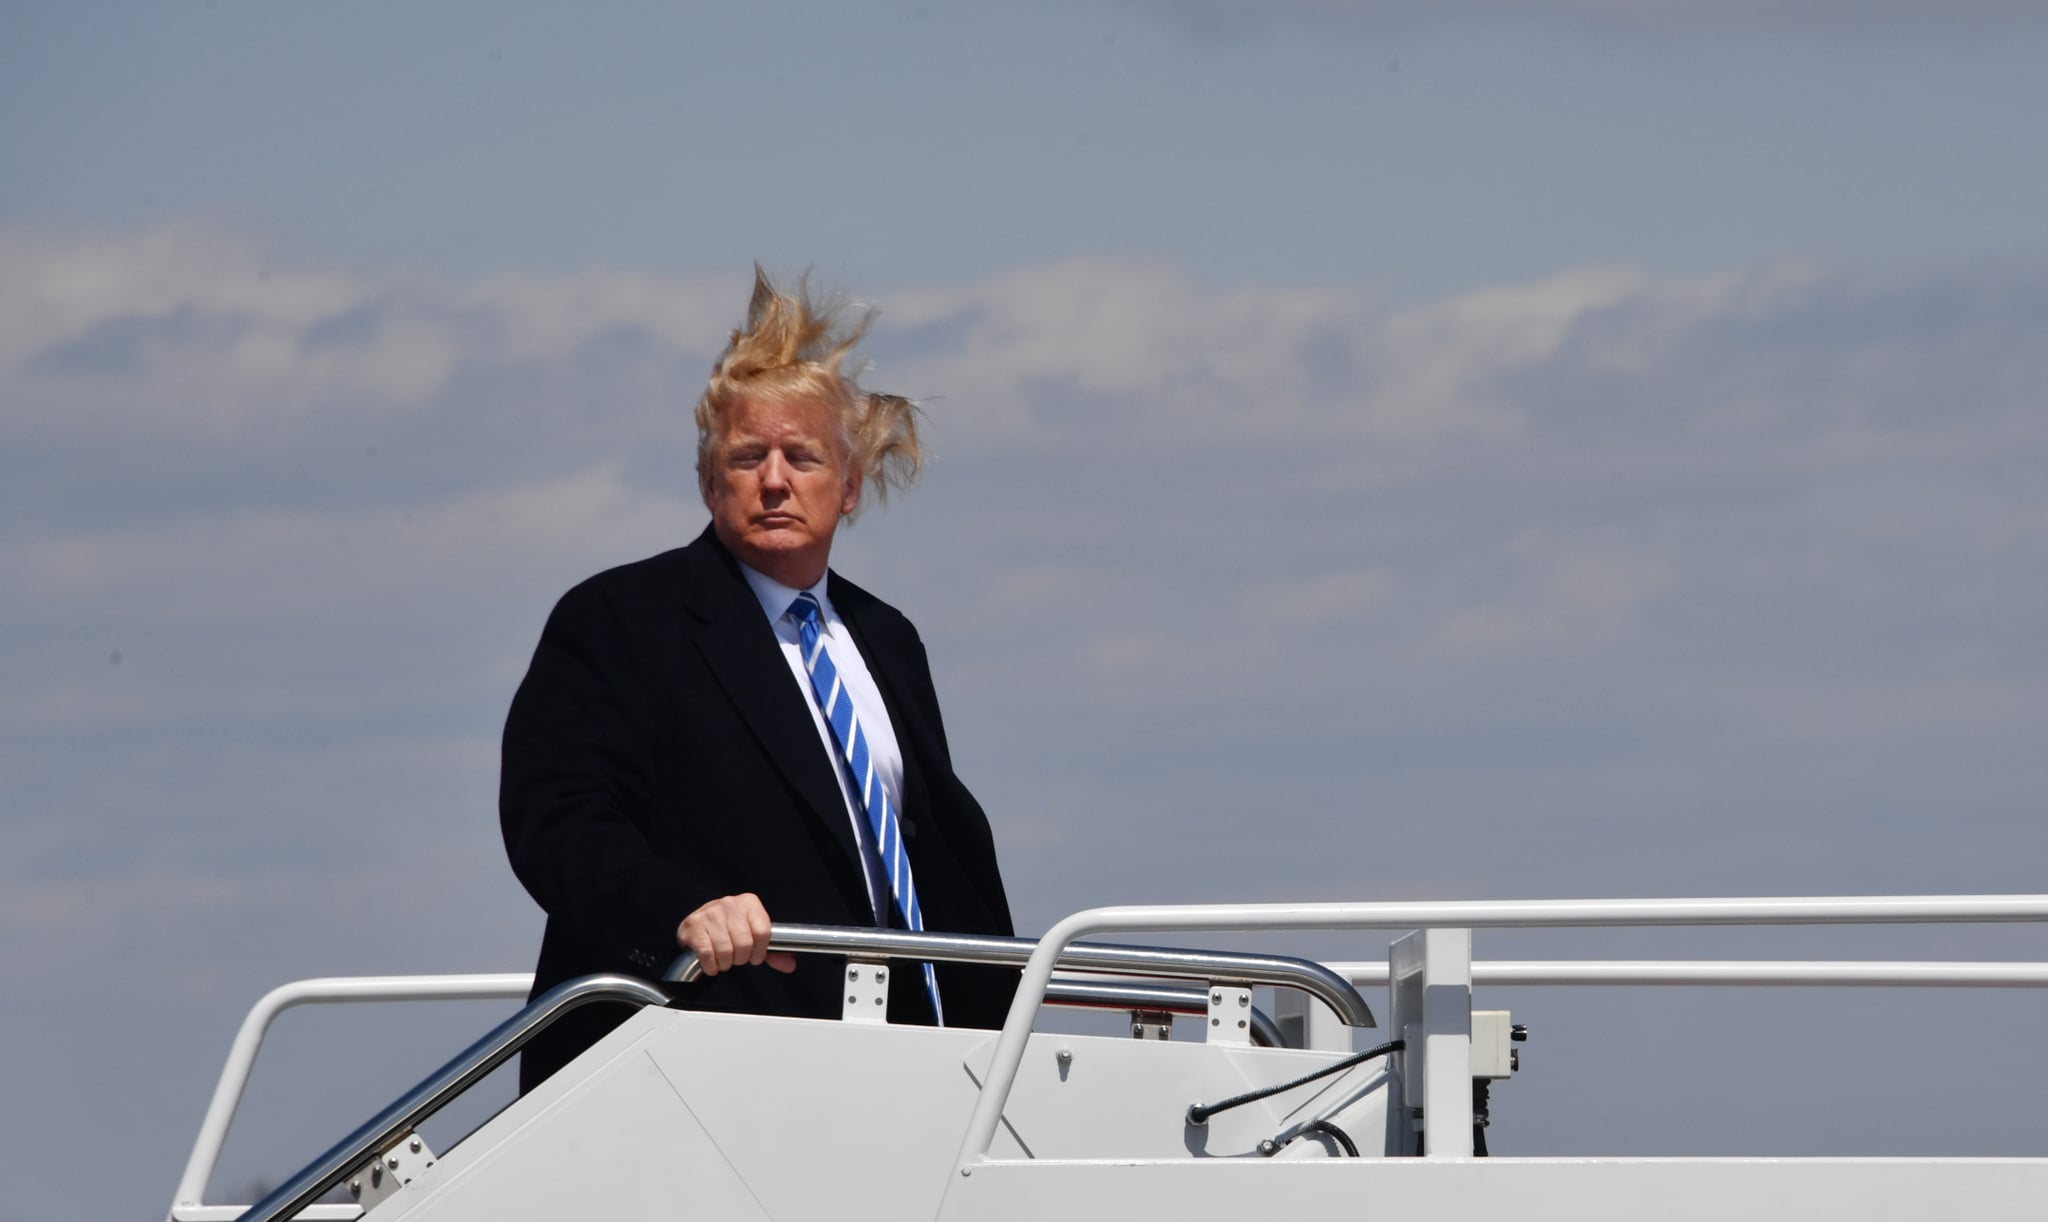 Trump's Hair Blowing While Boarding Air Force One Plane | POPSUGAR News